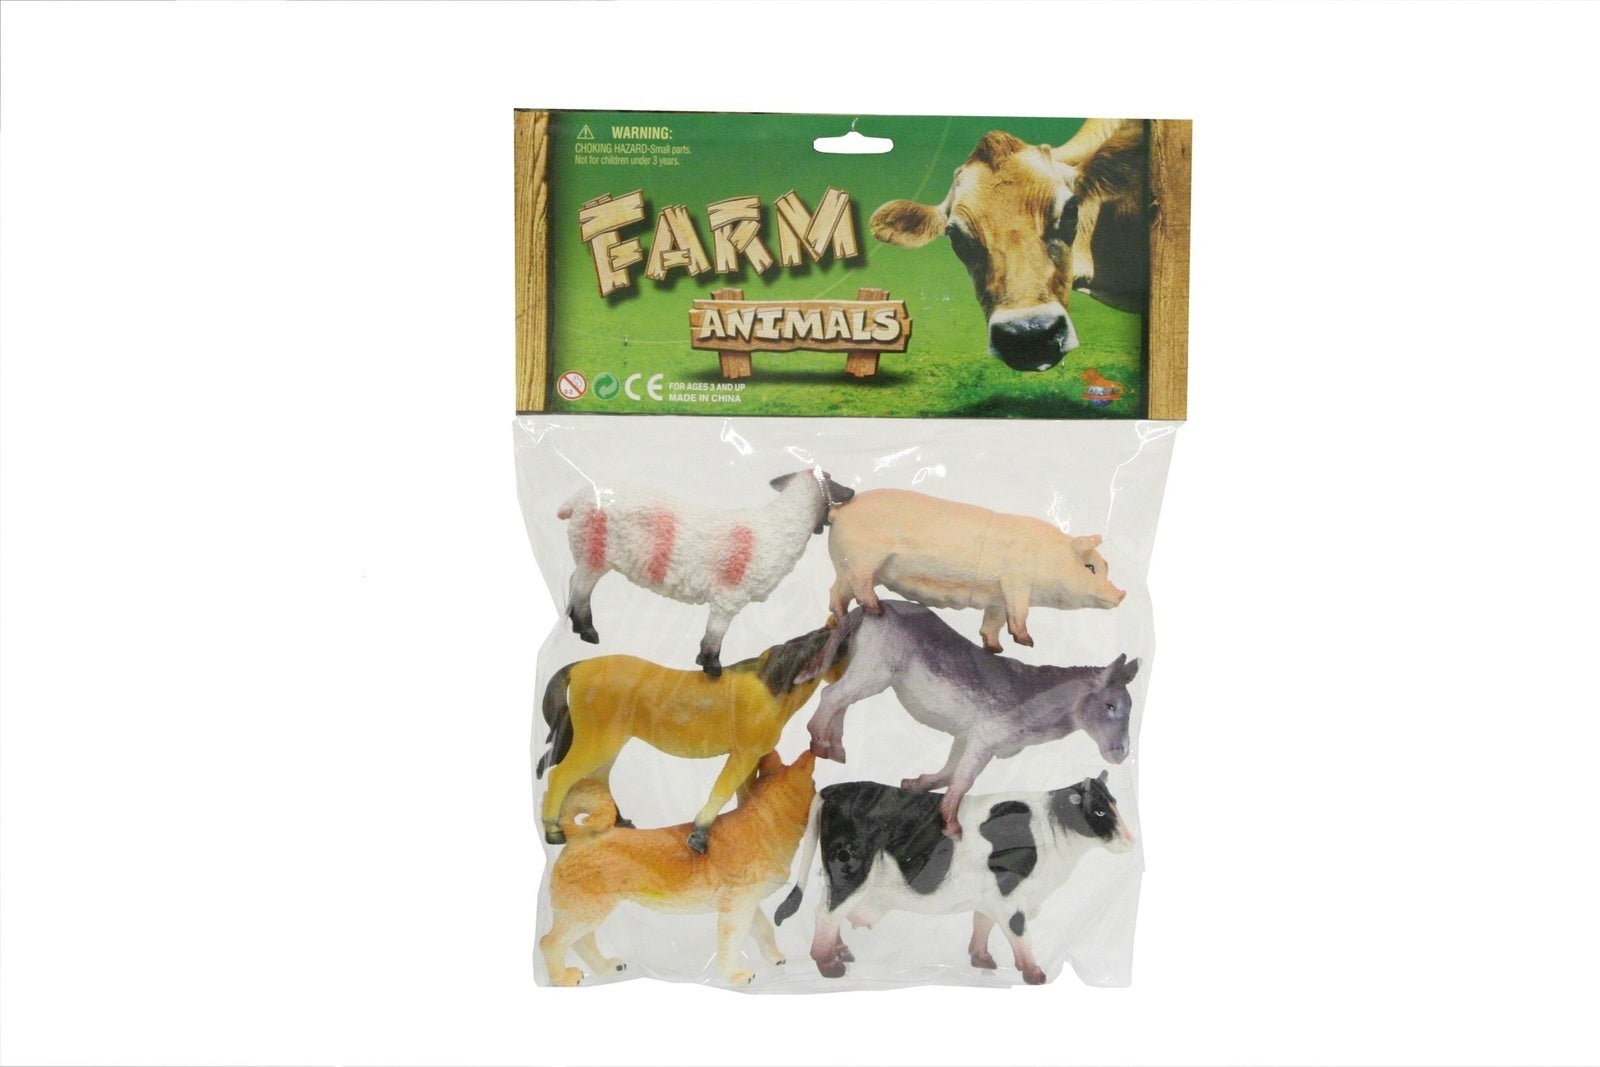 Farm Animals Figure Set (6pcs)